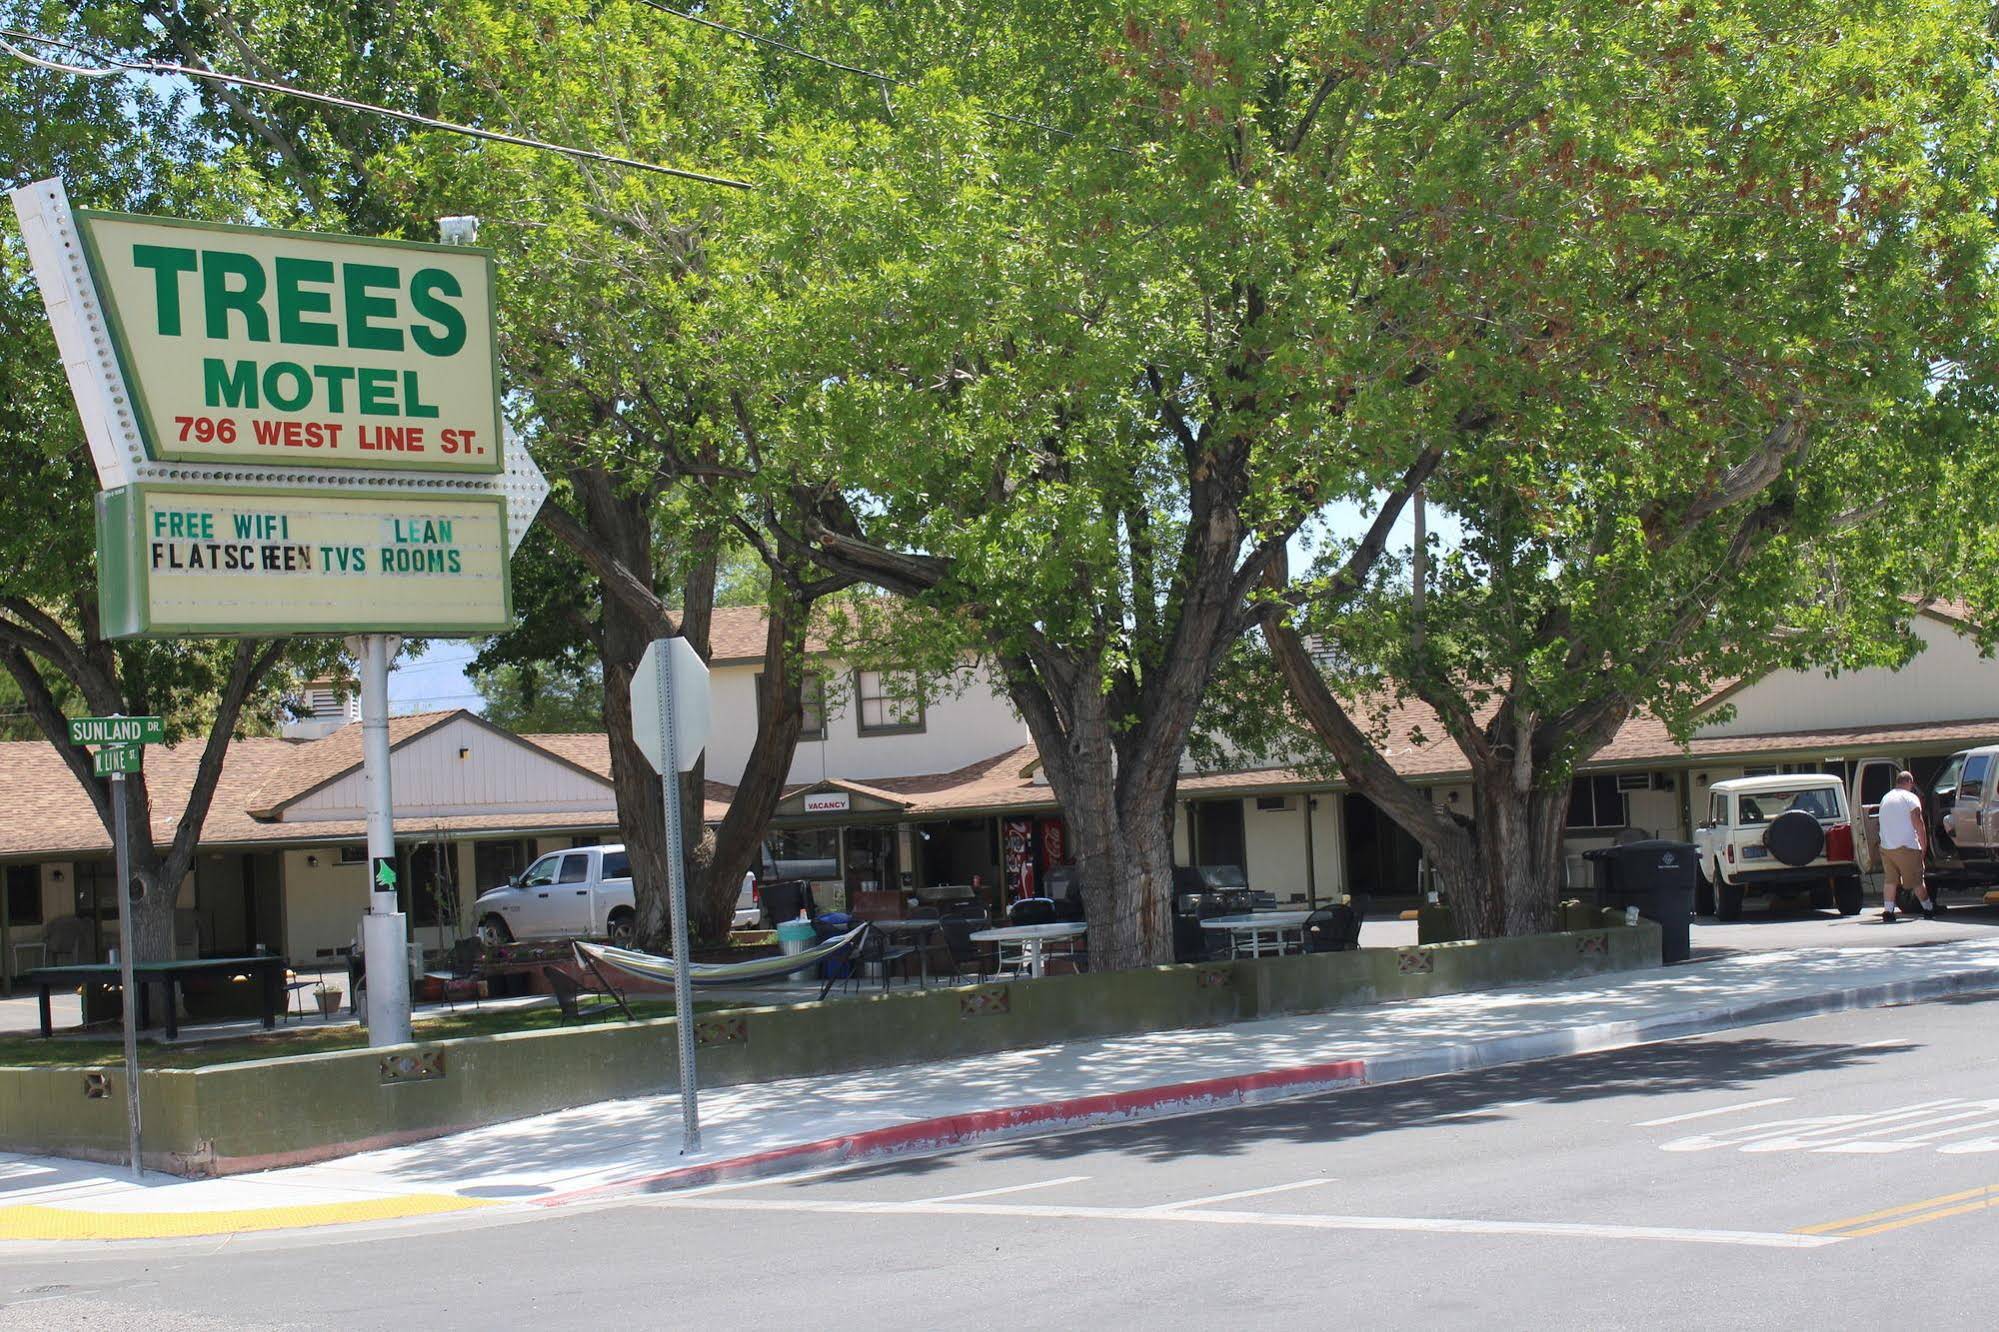 The Trees Motel